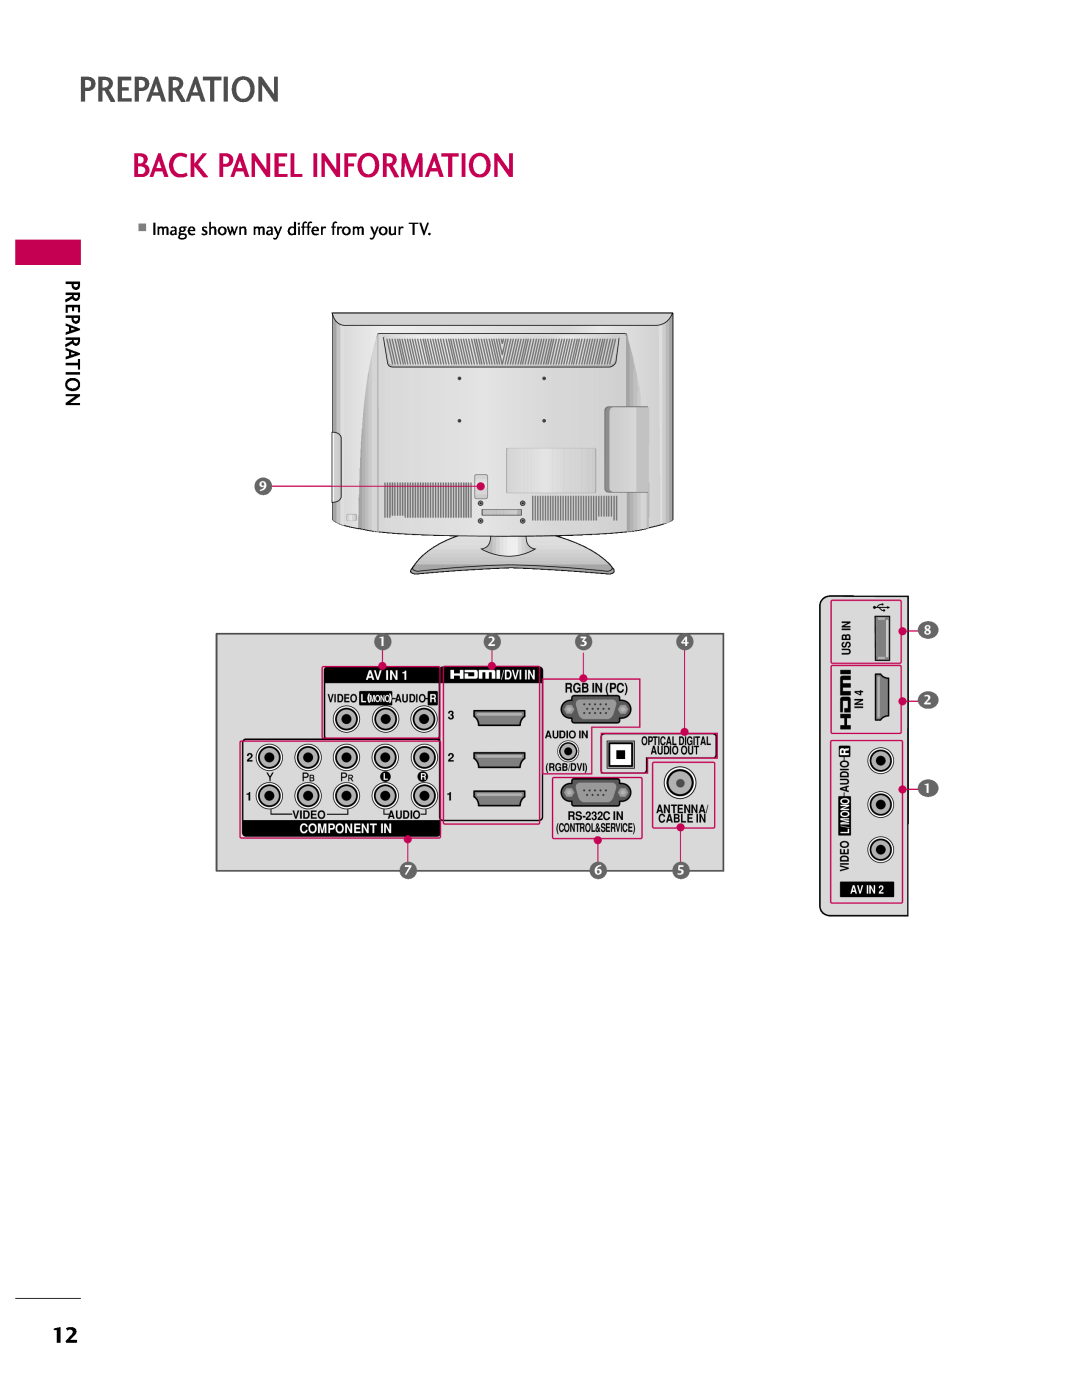 LG Electronics 47LH41 Back Panel Information, Preparation, Component In, Av In, Dvi In, Rgb In Pc, Audio In, Rgb/Dvi 